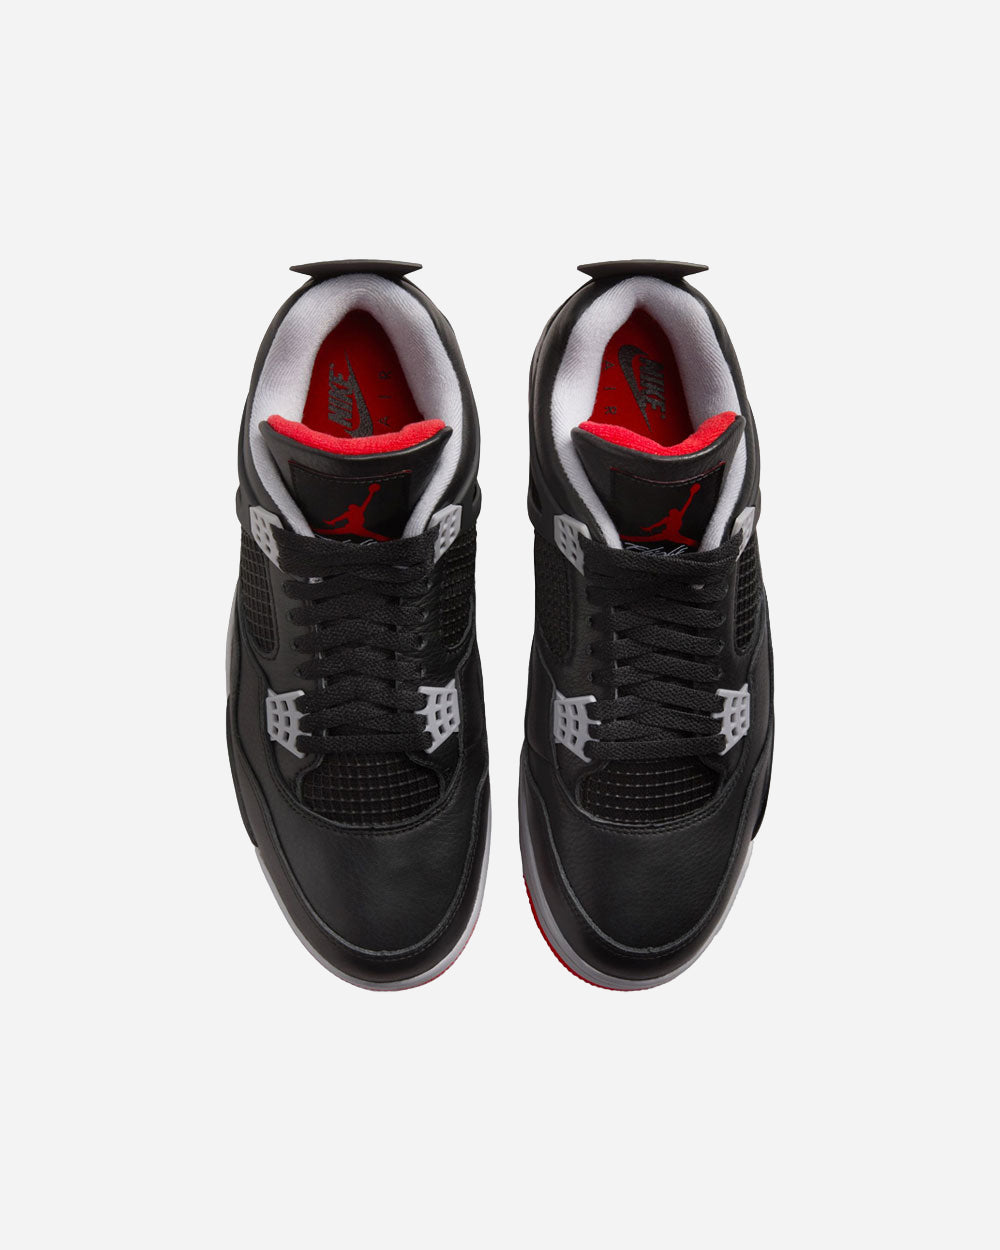 Air Jordan 4 Retro "Bred Reimagined" Black/Fire Red/Cement FV5029-006